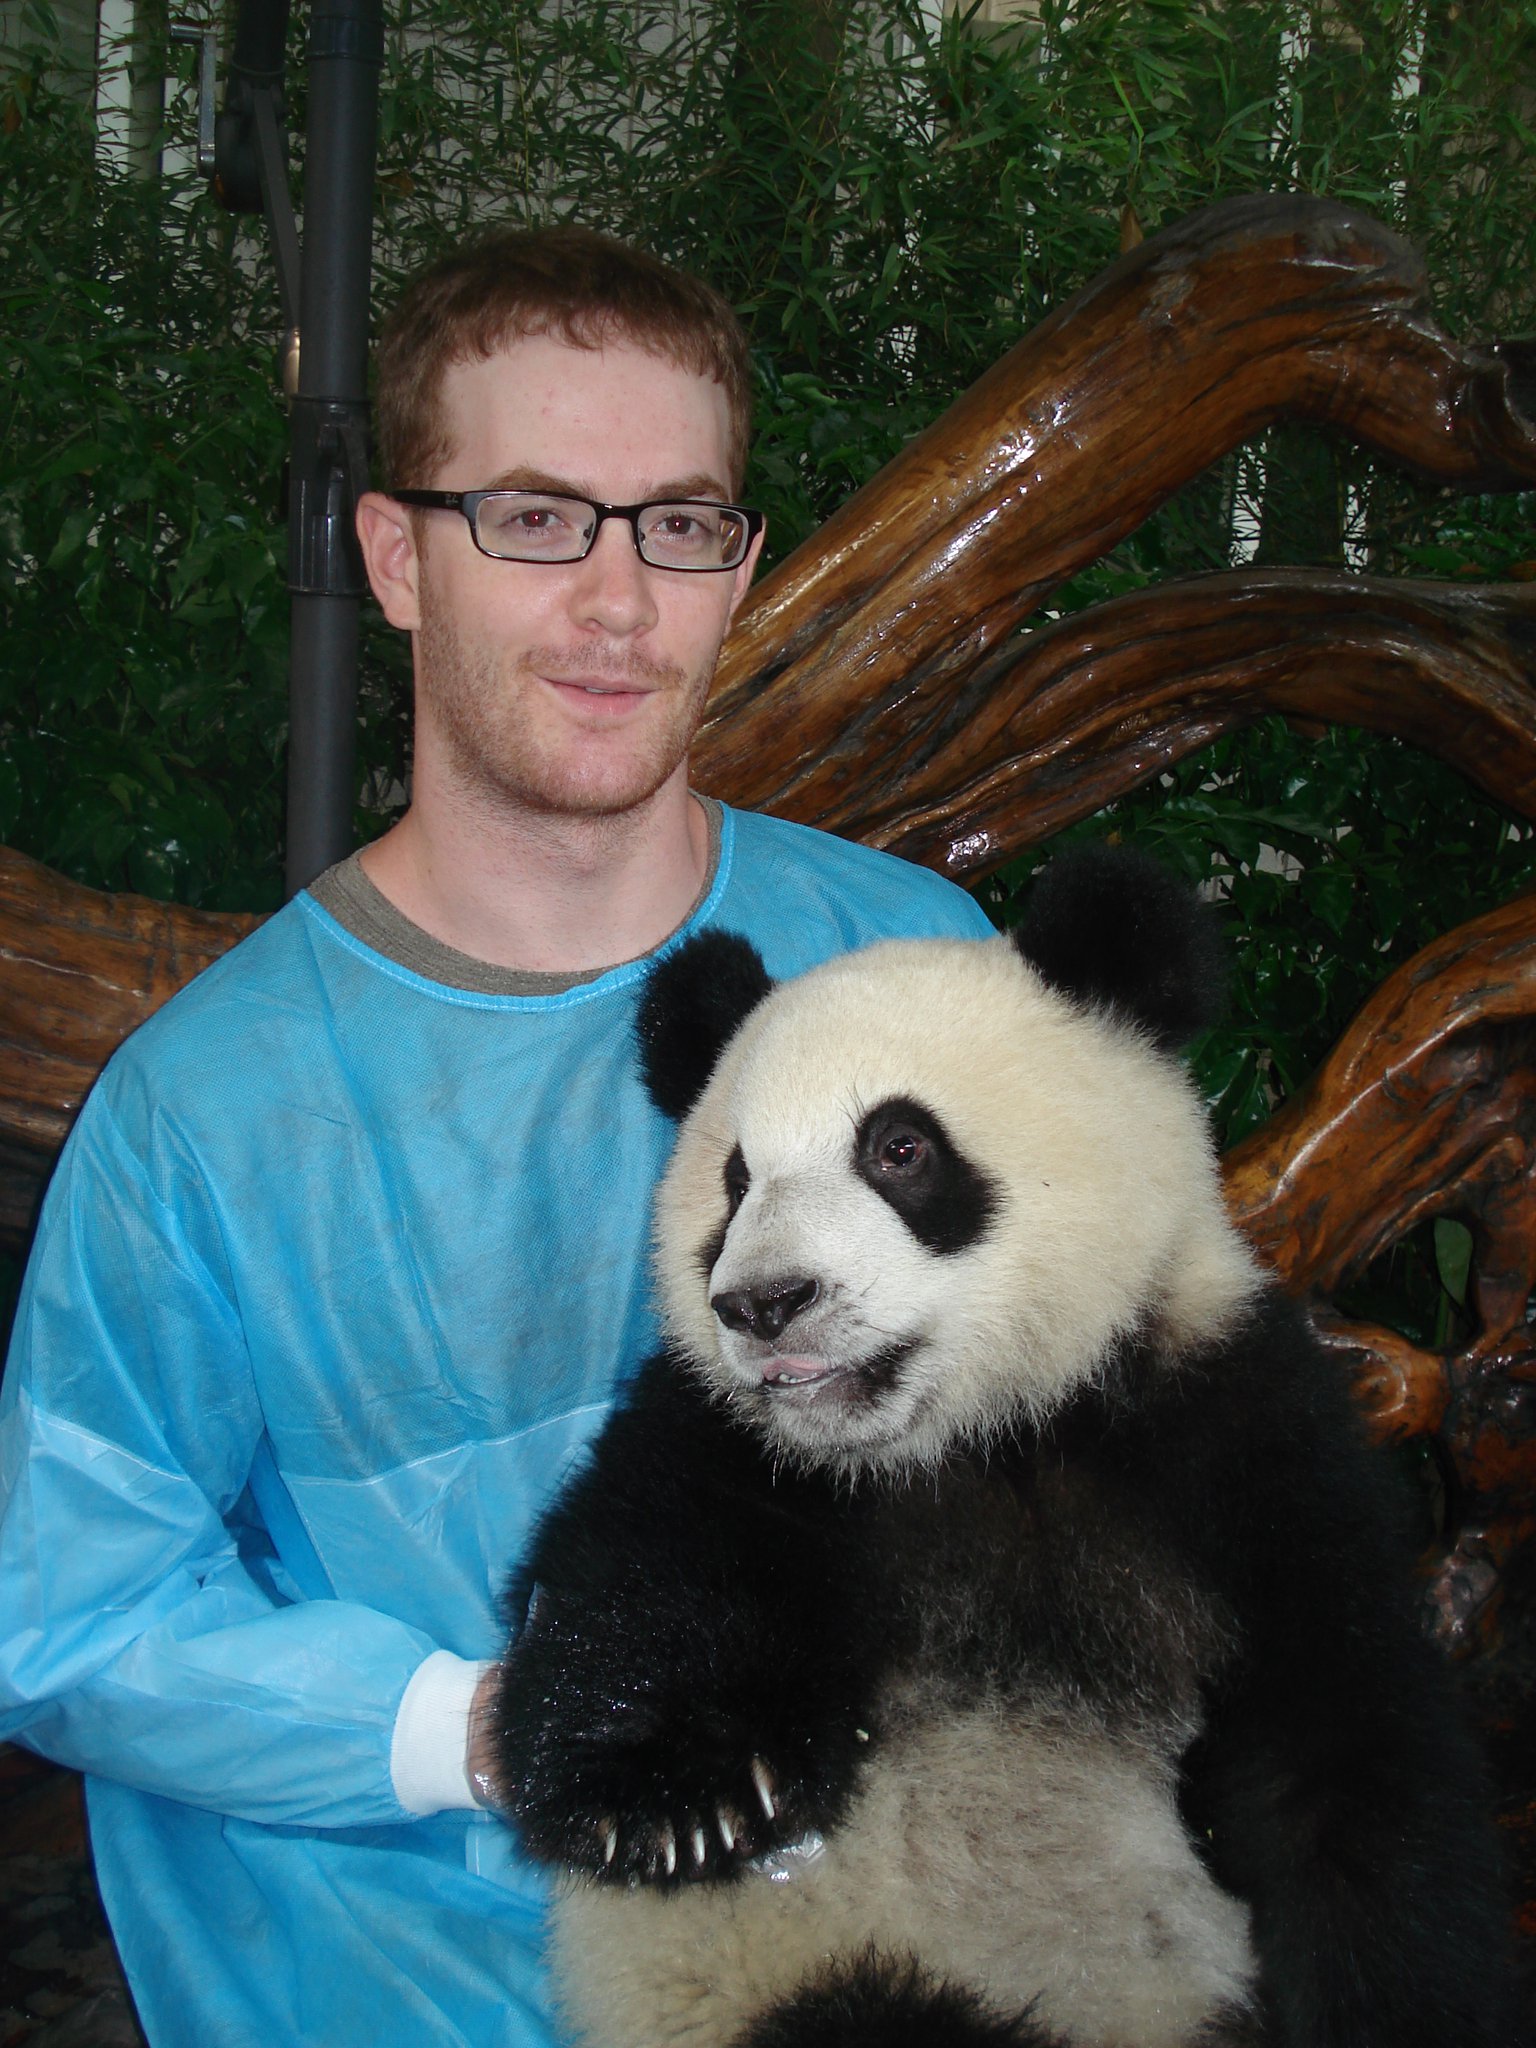 Chengdu panda research